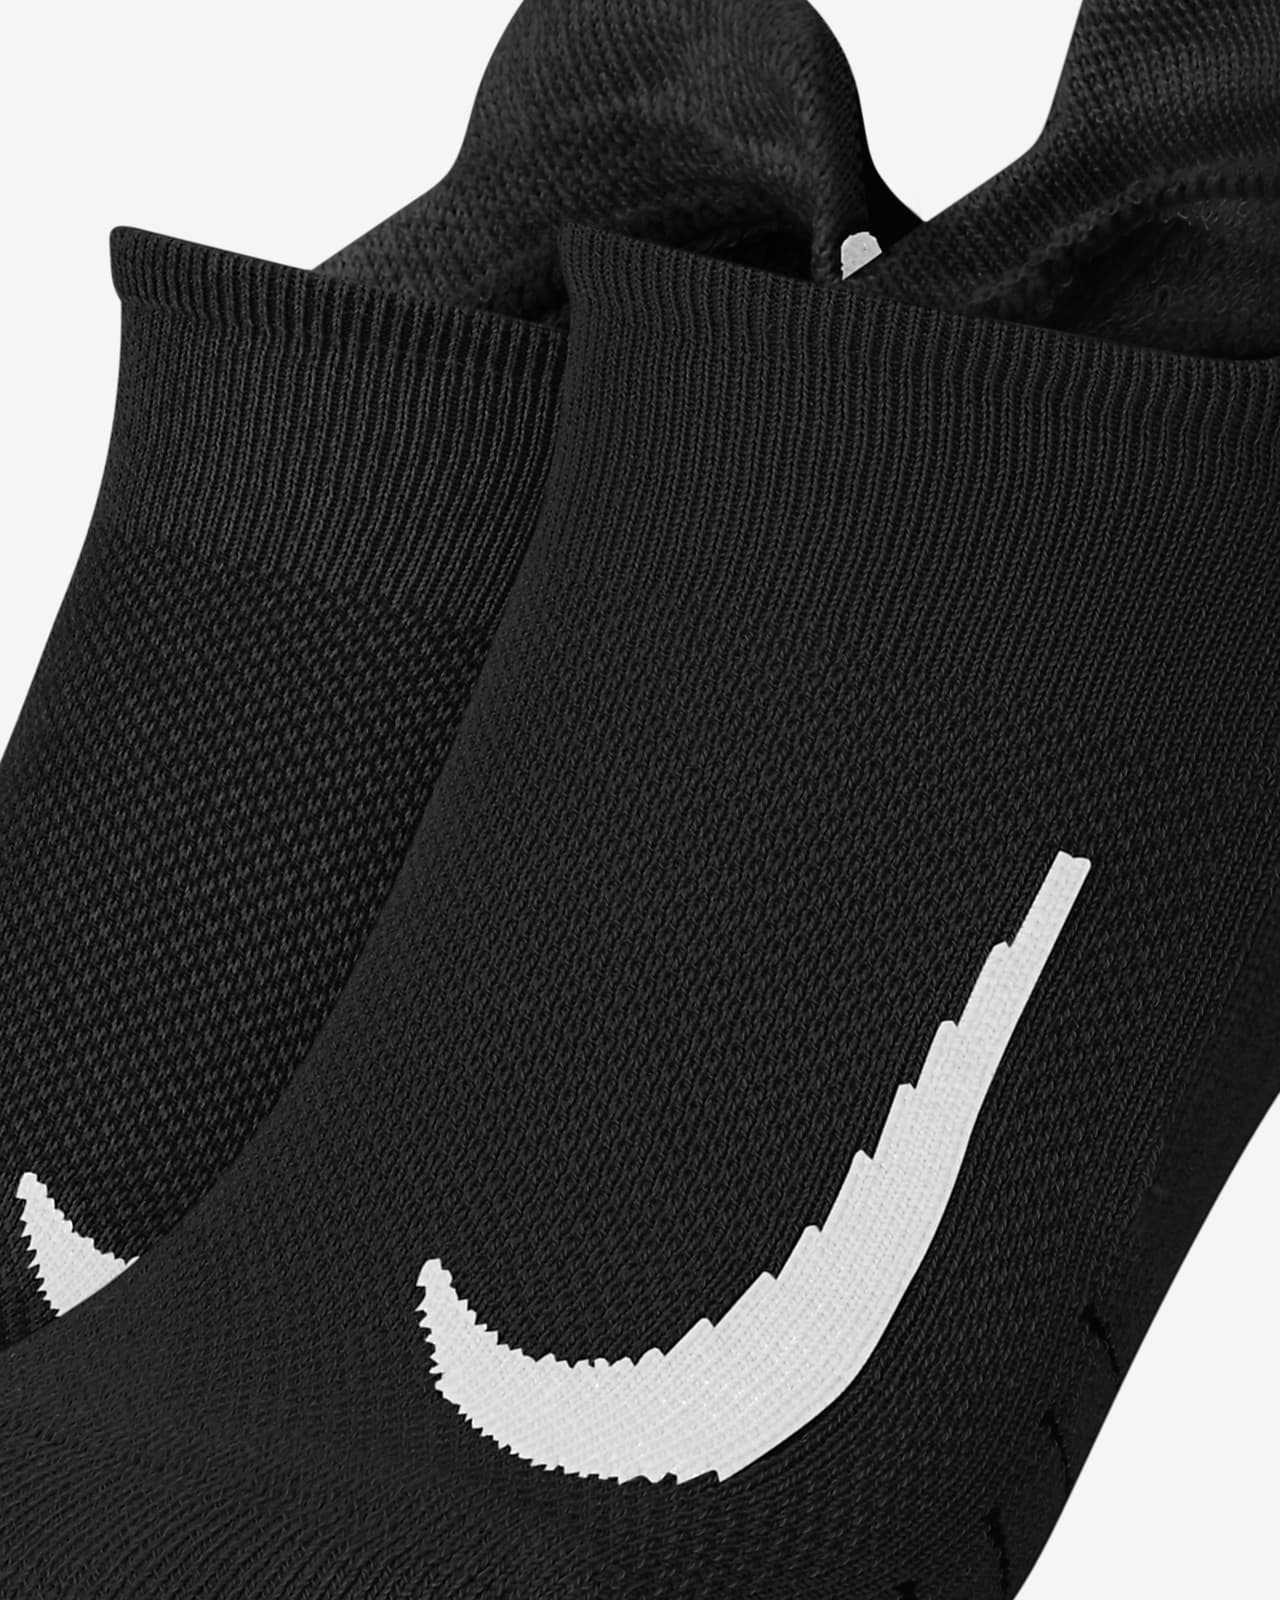 Perth Blackborough Promotie stad Nike Multiplier Running No-Show Socks (2 Pairs). Nike ID